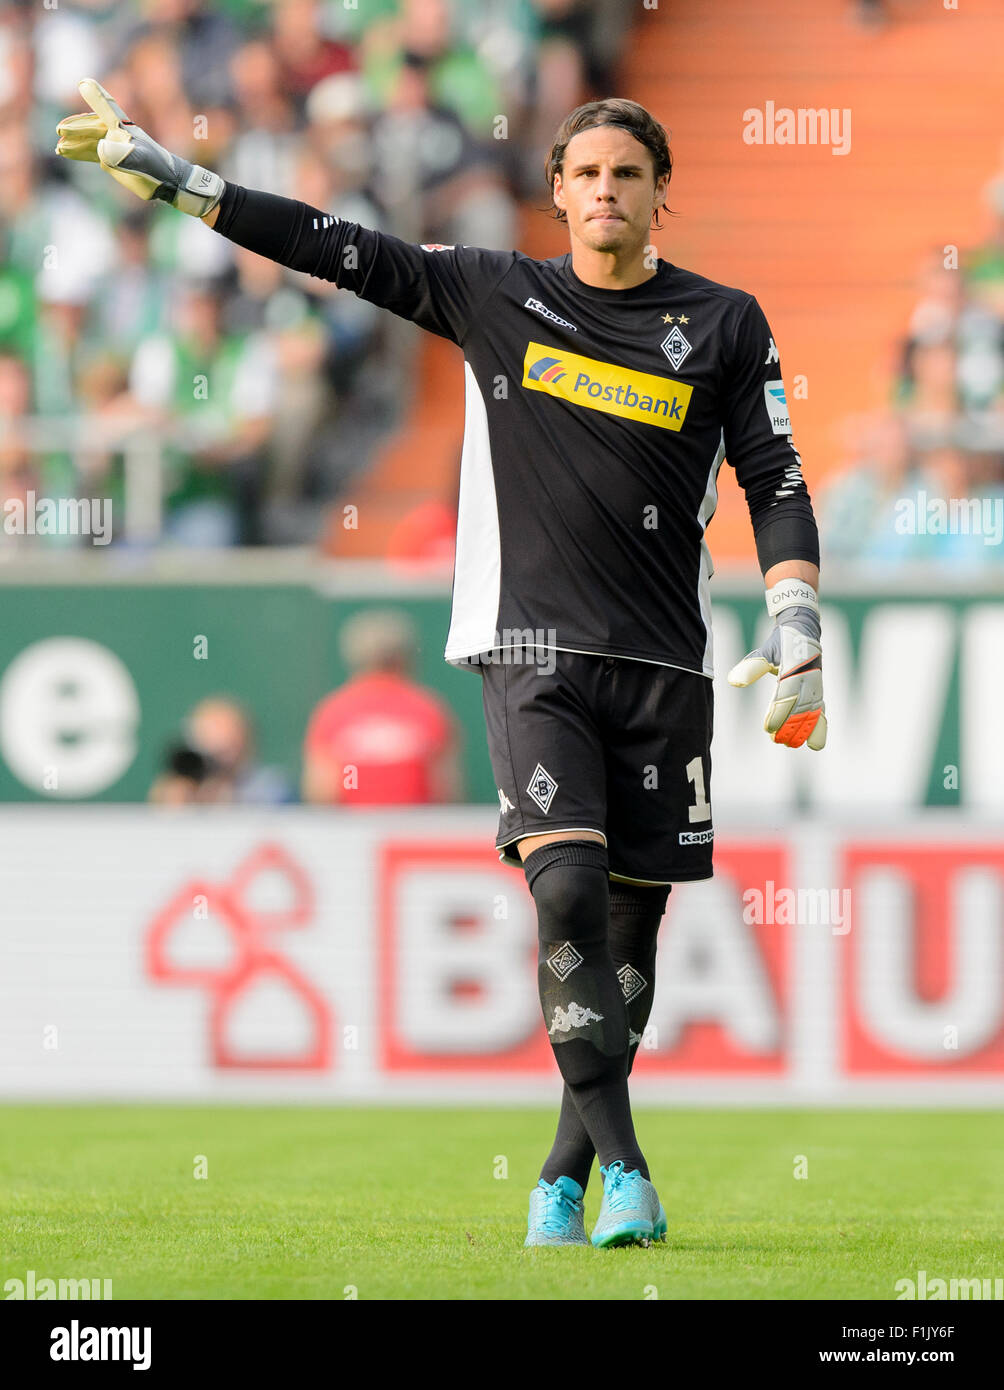 Moenchengladbach's goalkeeper Yann Sommer reacts during the Bundesliga soccer match SV Werder Bremen vs Borussia Moenchengladbach in Bremen, 30 August 2015. Photo: Thomas Eisenhuth/dpa- NO WIRE SERVICE - Stock Photo